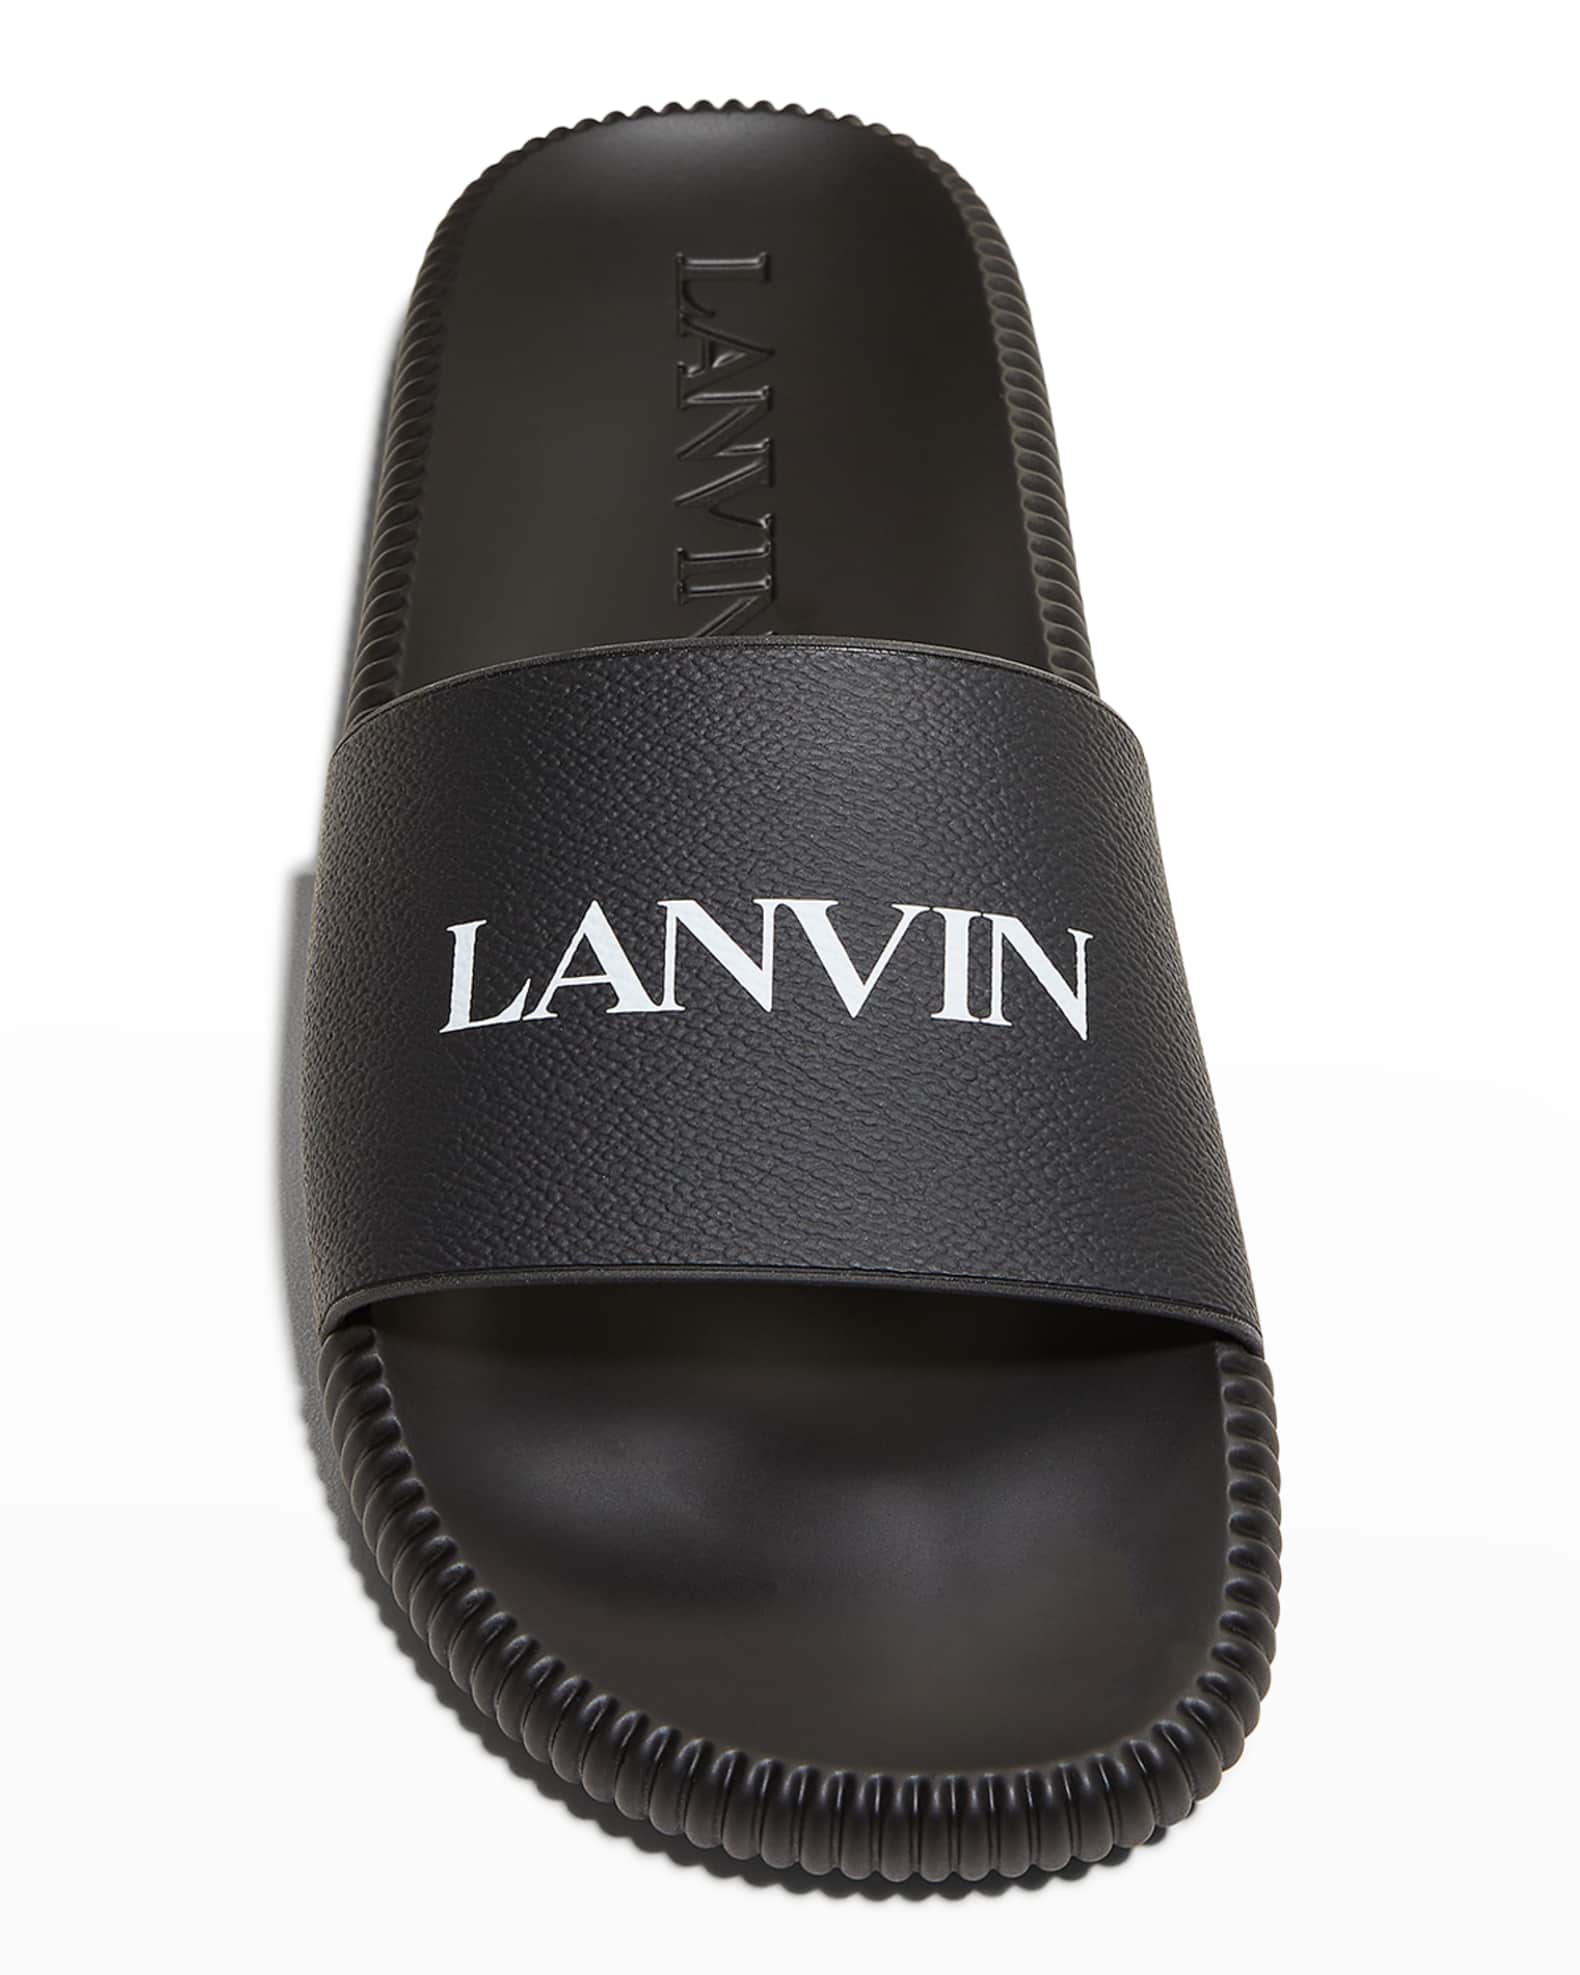 Lanvin Logo Leather Sandals | Neiman Marcus